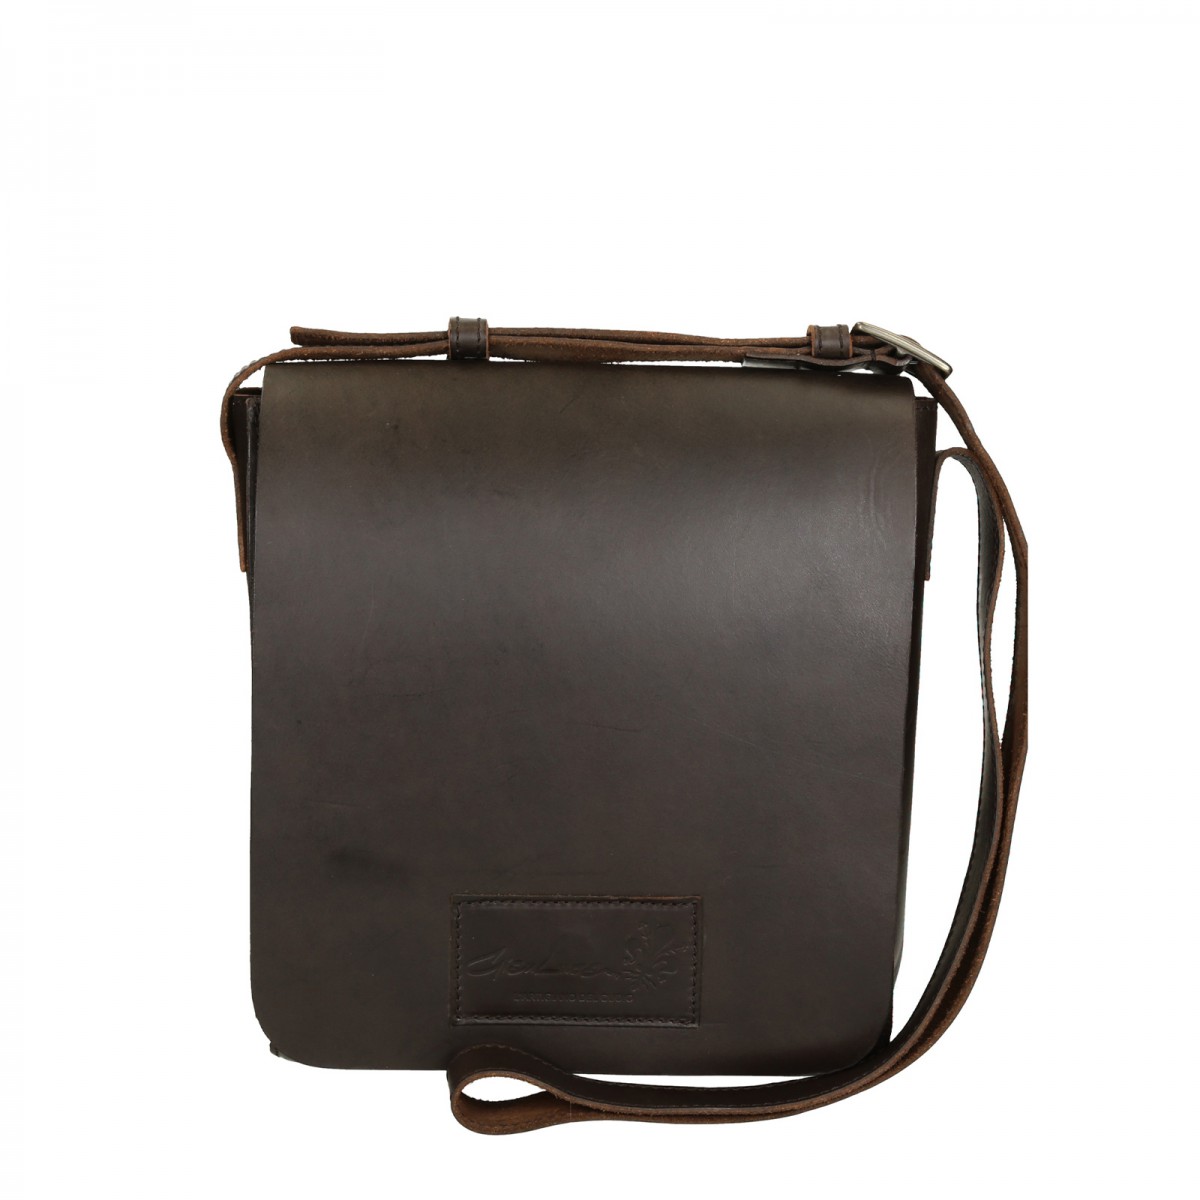 Brown leather shoulder bag long strap Handmade | Gianluca - The leather craftsman